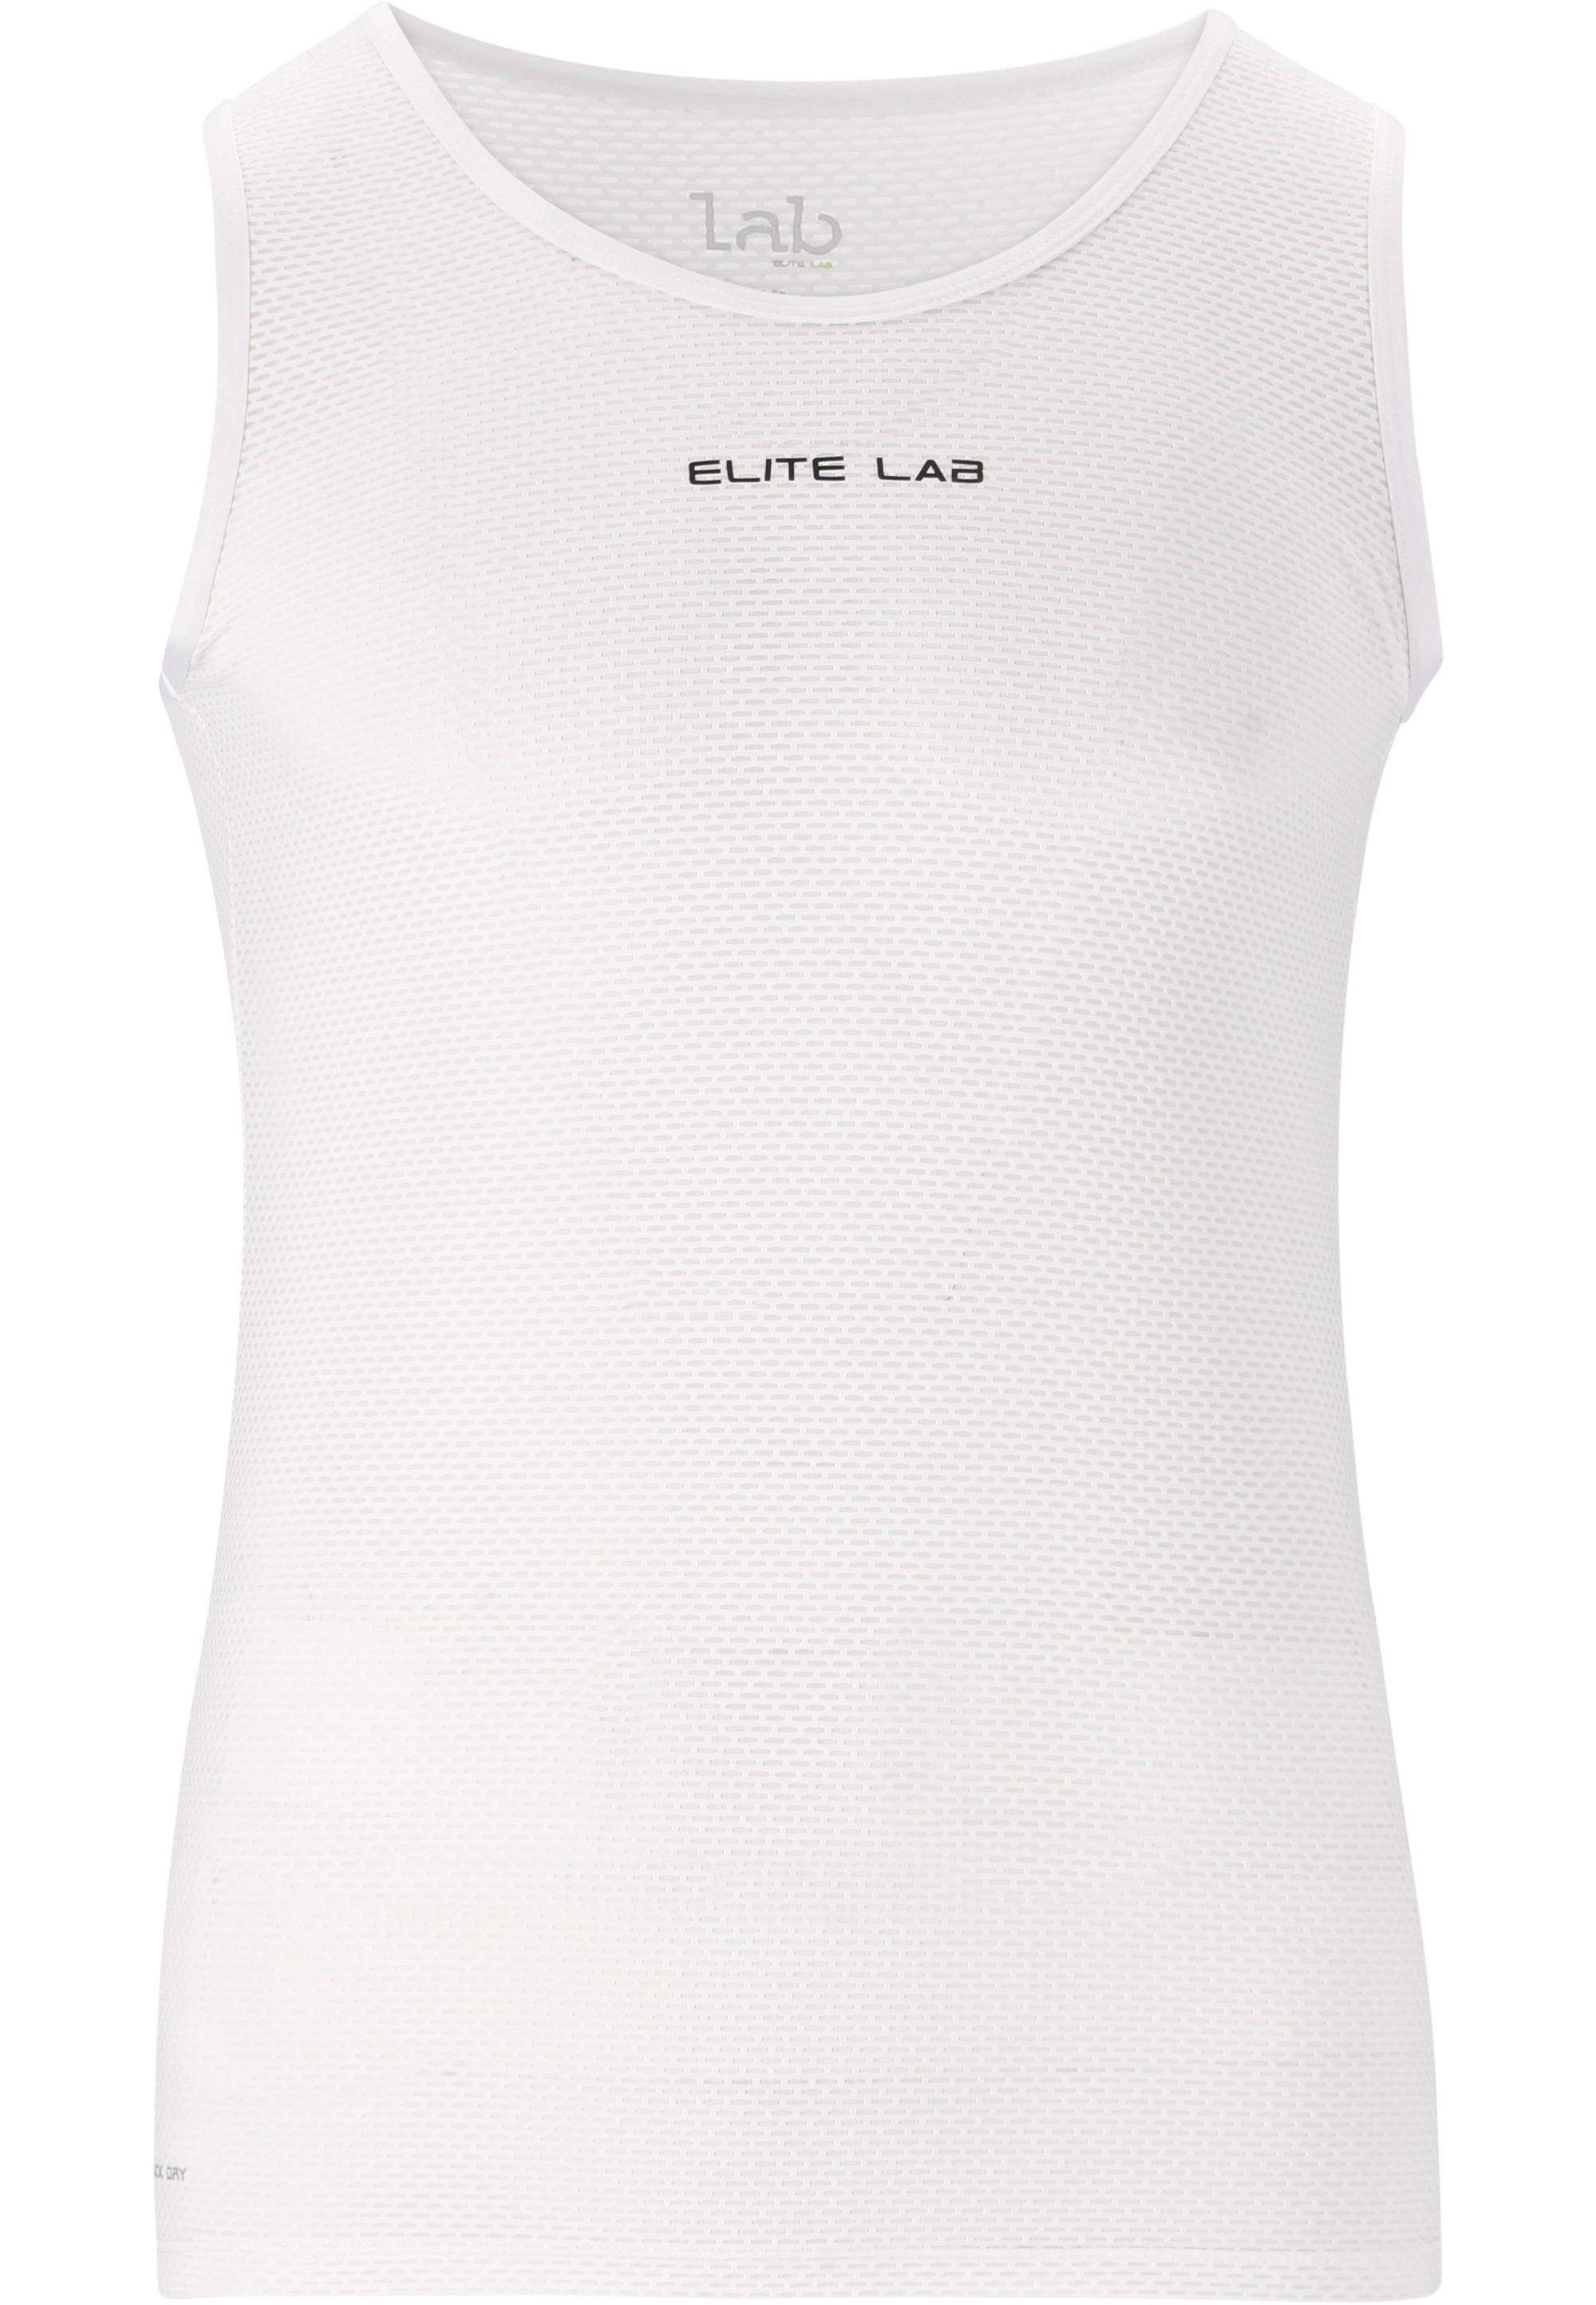 ELITE LAB Funktionsshirt »Bike Elite X1«, aus atmungsaktivem Material